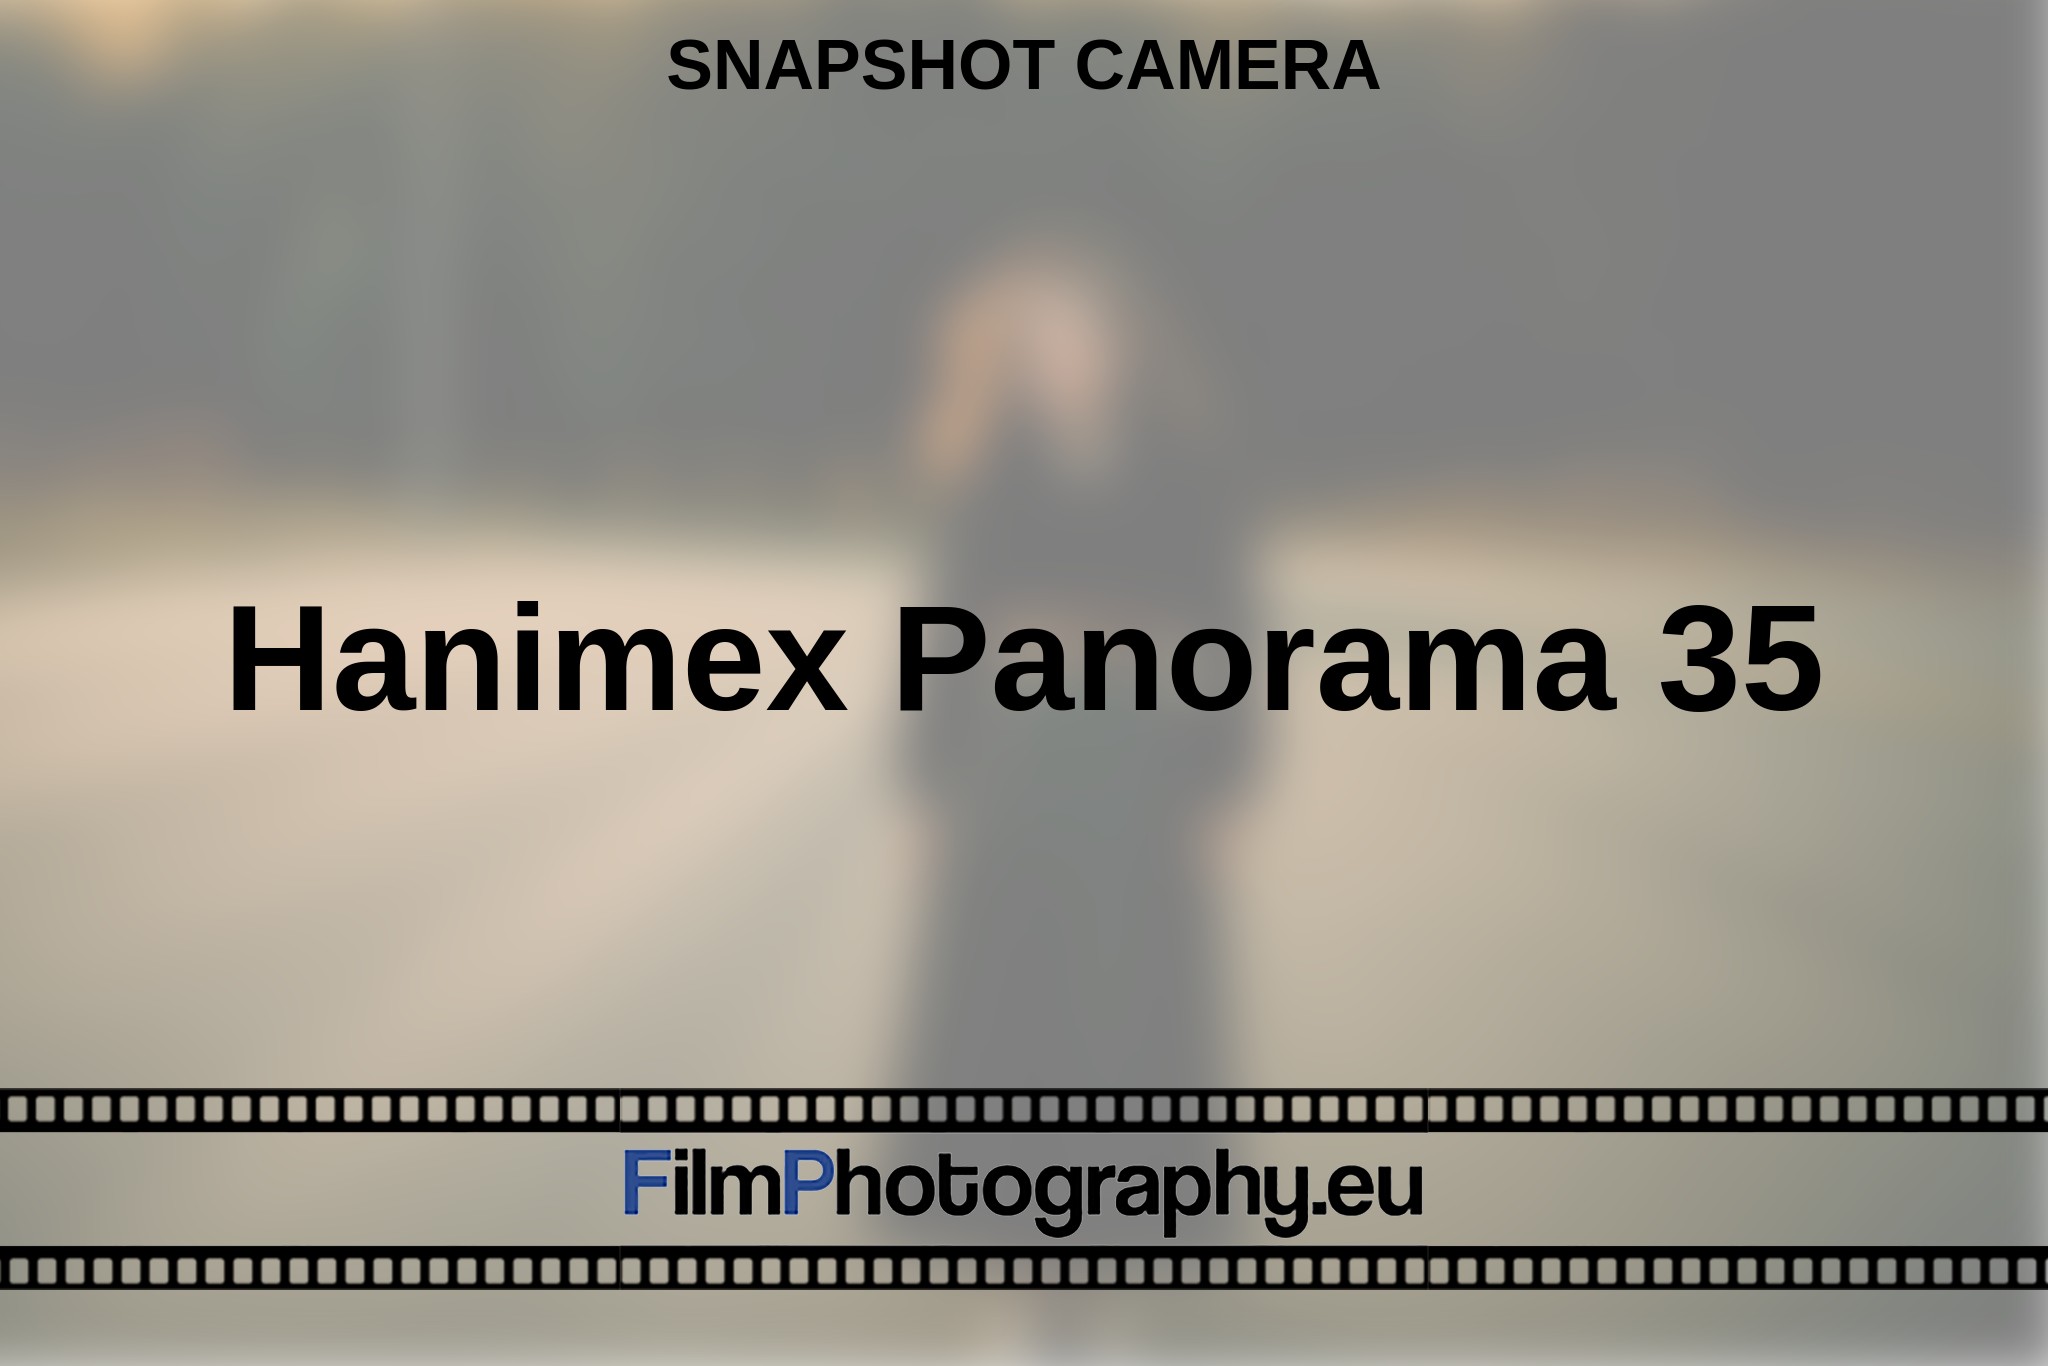 hanimex-panorama-35-snapshot-camera-en-bnv.jpg